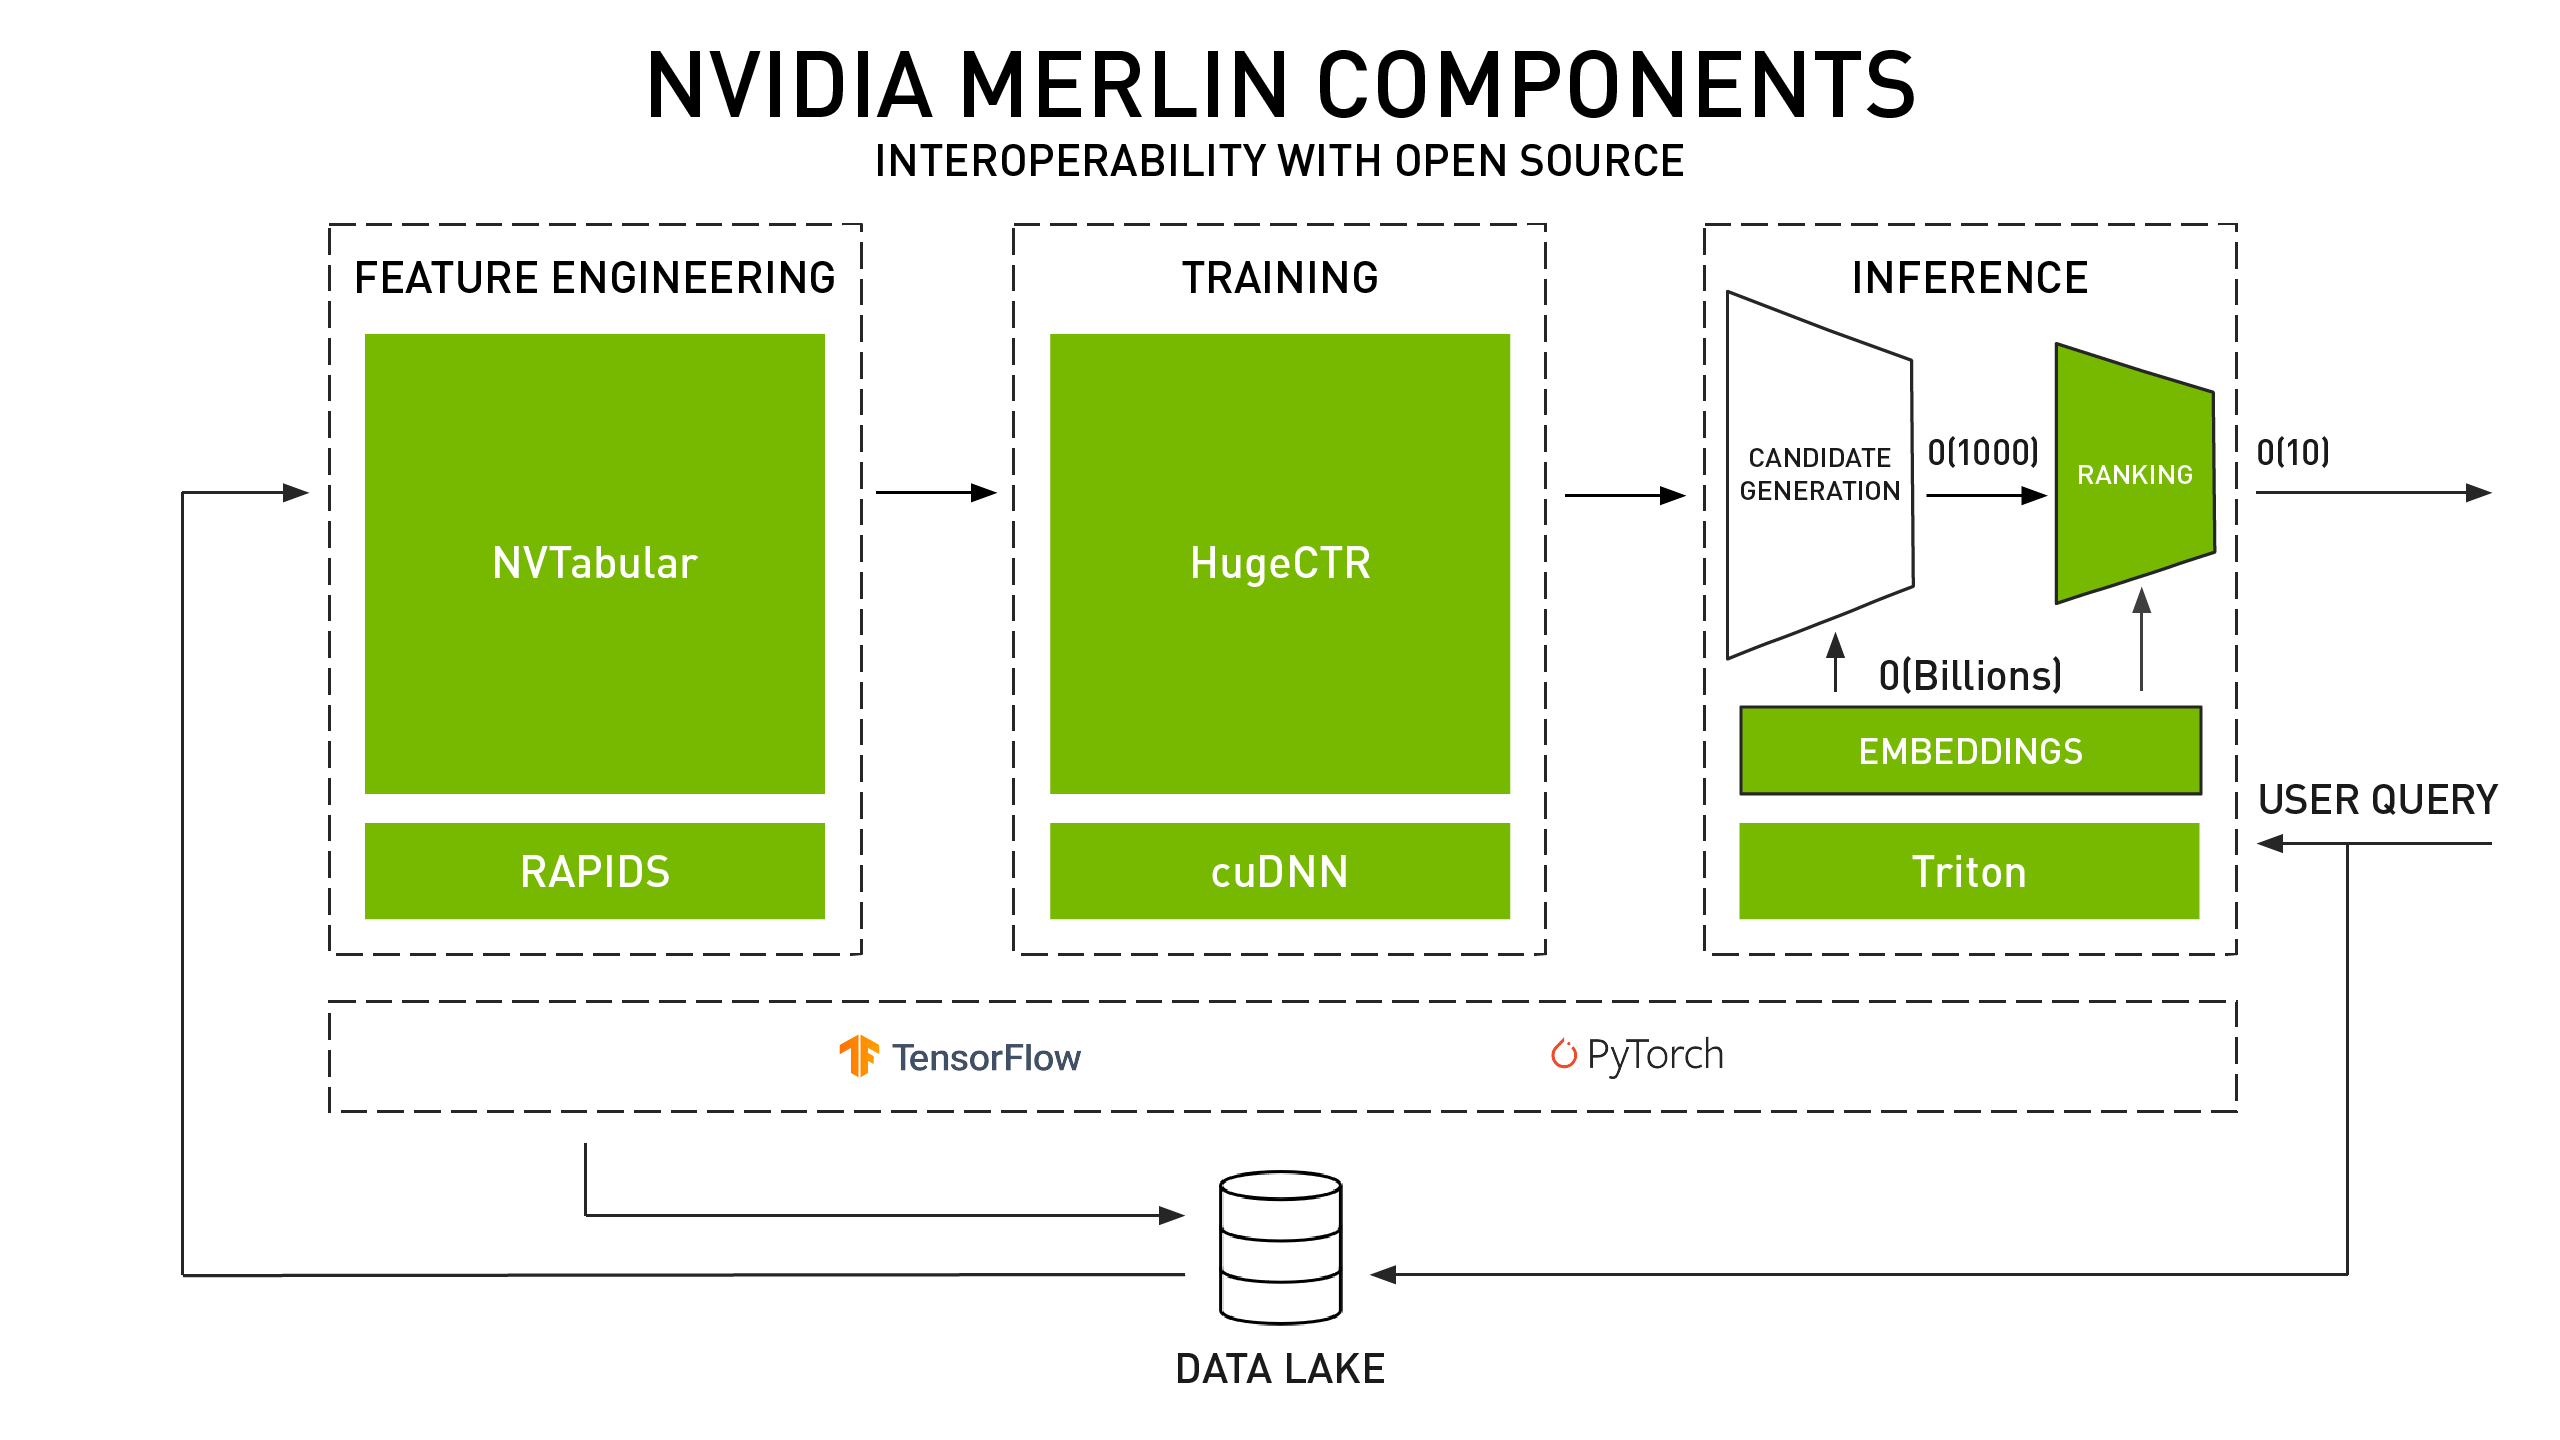 Merlin components interoperabitlity chart